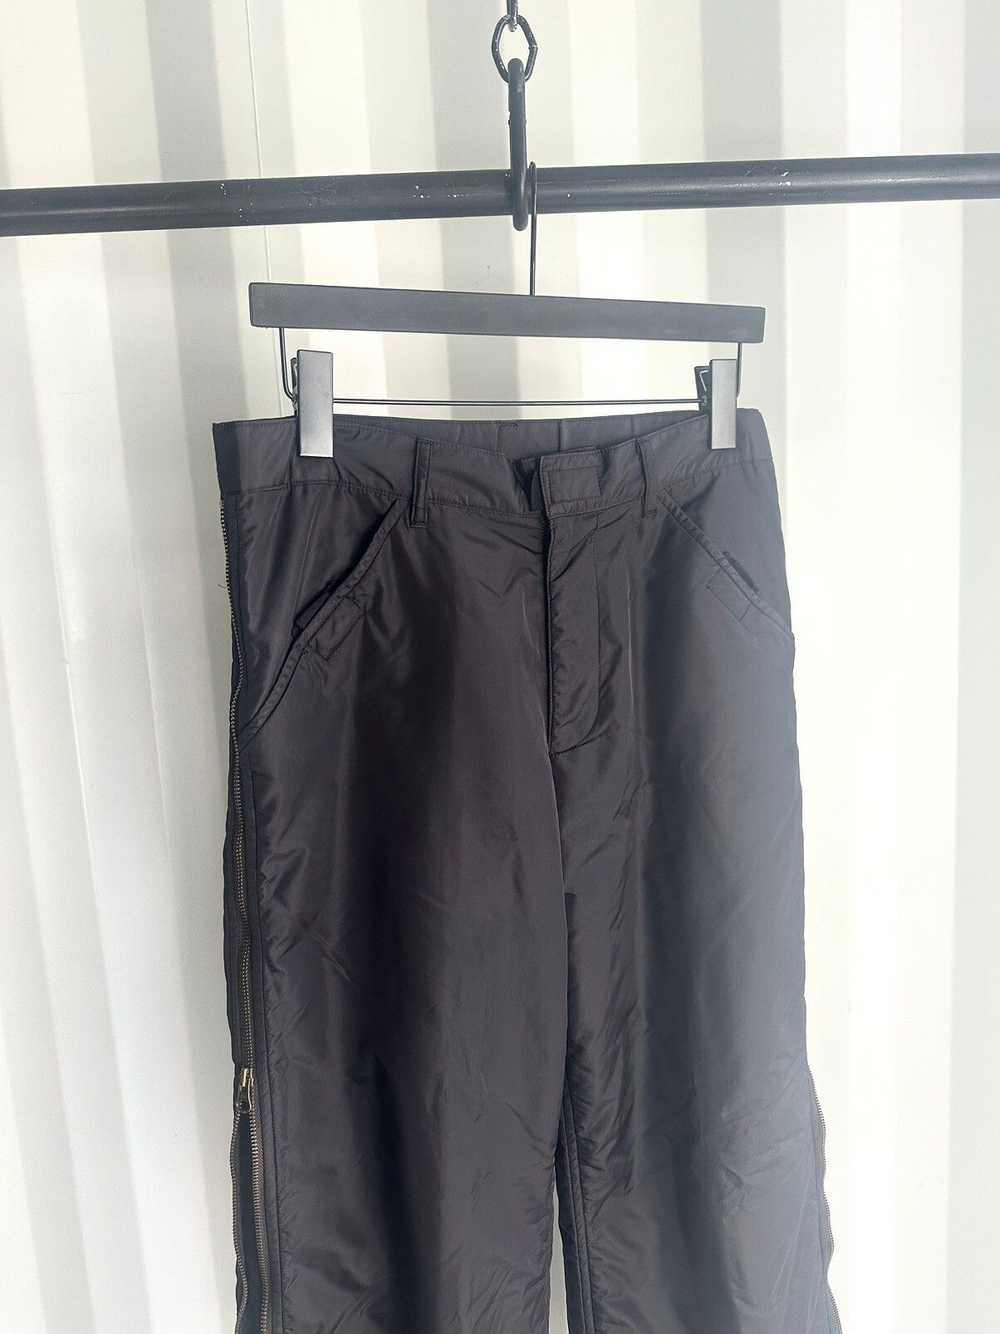 Jean Paul Gaultier Nylon Insulated Side Zip Pants - image 2